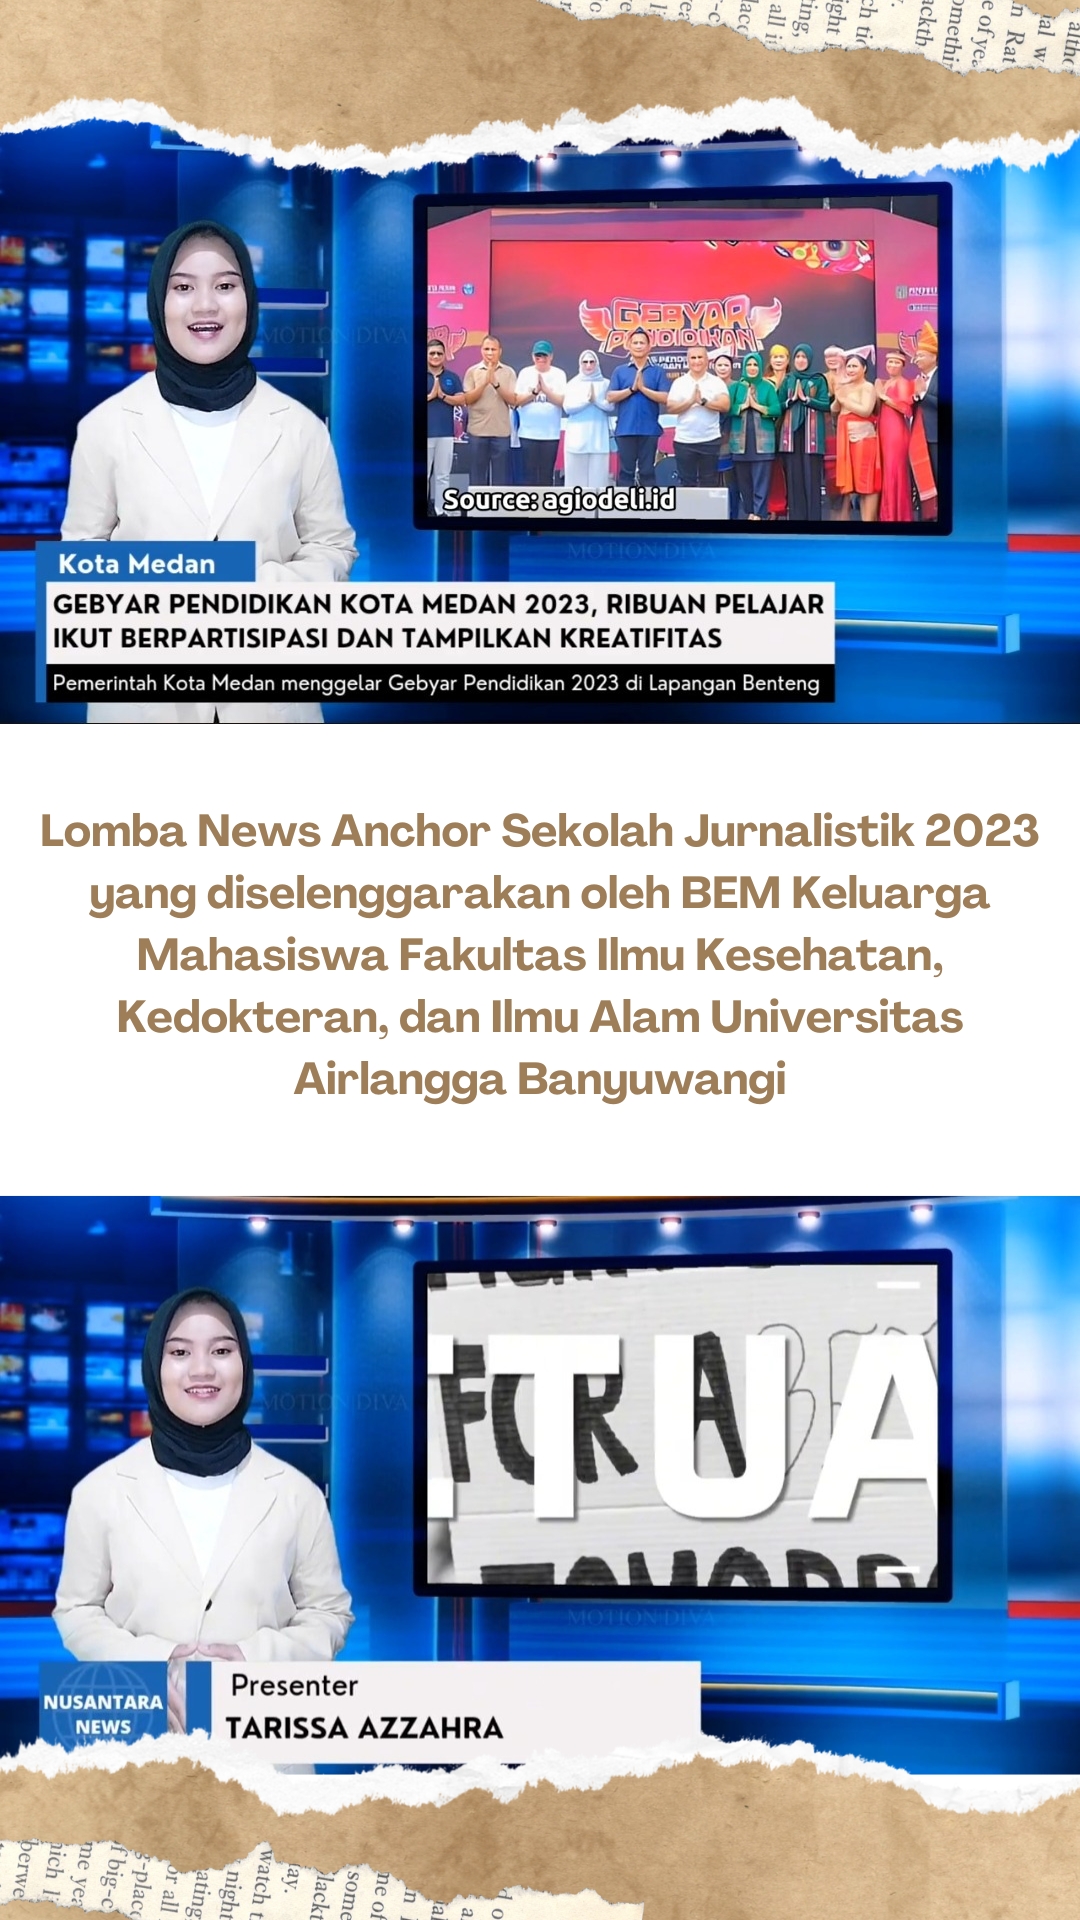 Foto Lomba News Anchor Sekolah Jurnalistik 2023